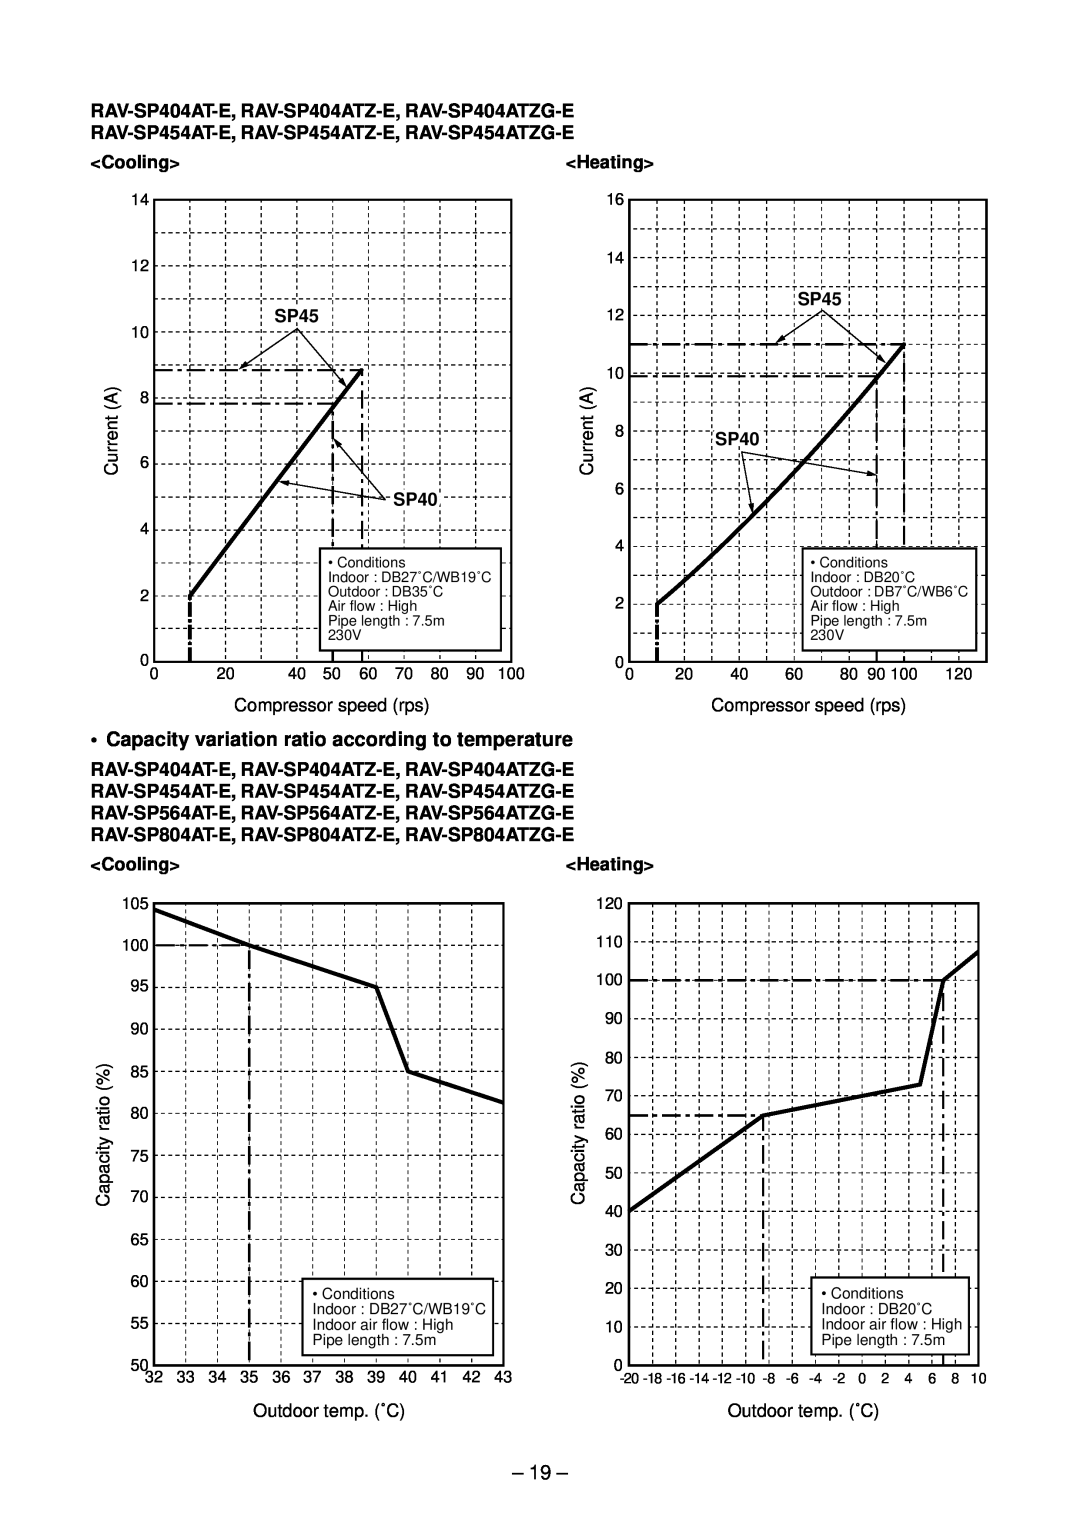 Toshiba RAV-SP454AT-E Capacity variation ratio according to temperature, RAV-SP404AT-E, RAV-SP404ATZ-E, RAV-SP404ATZG-E 